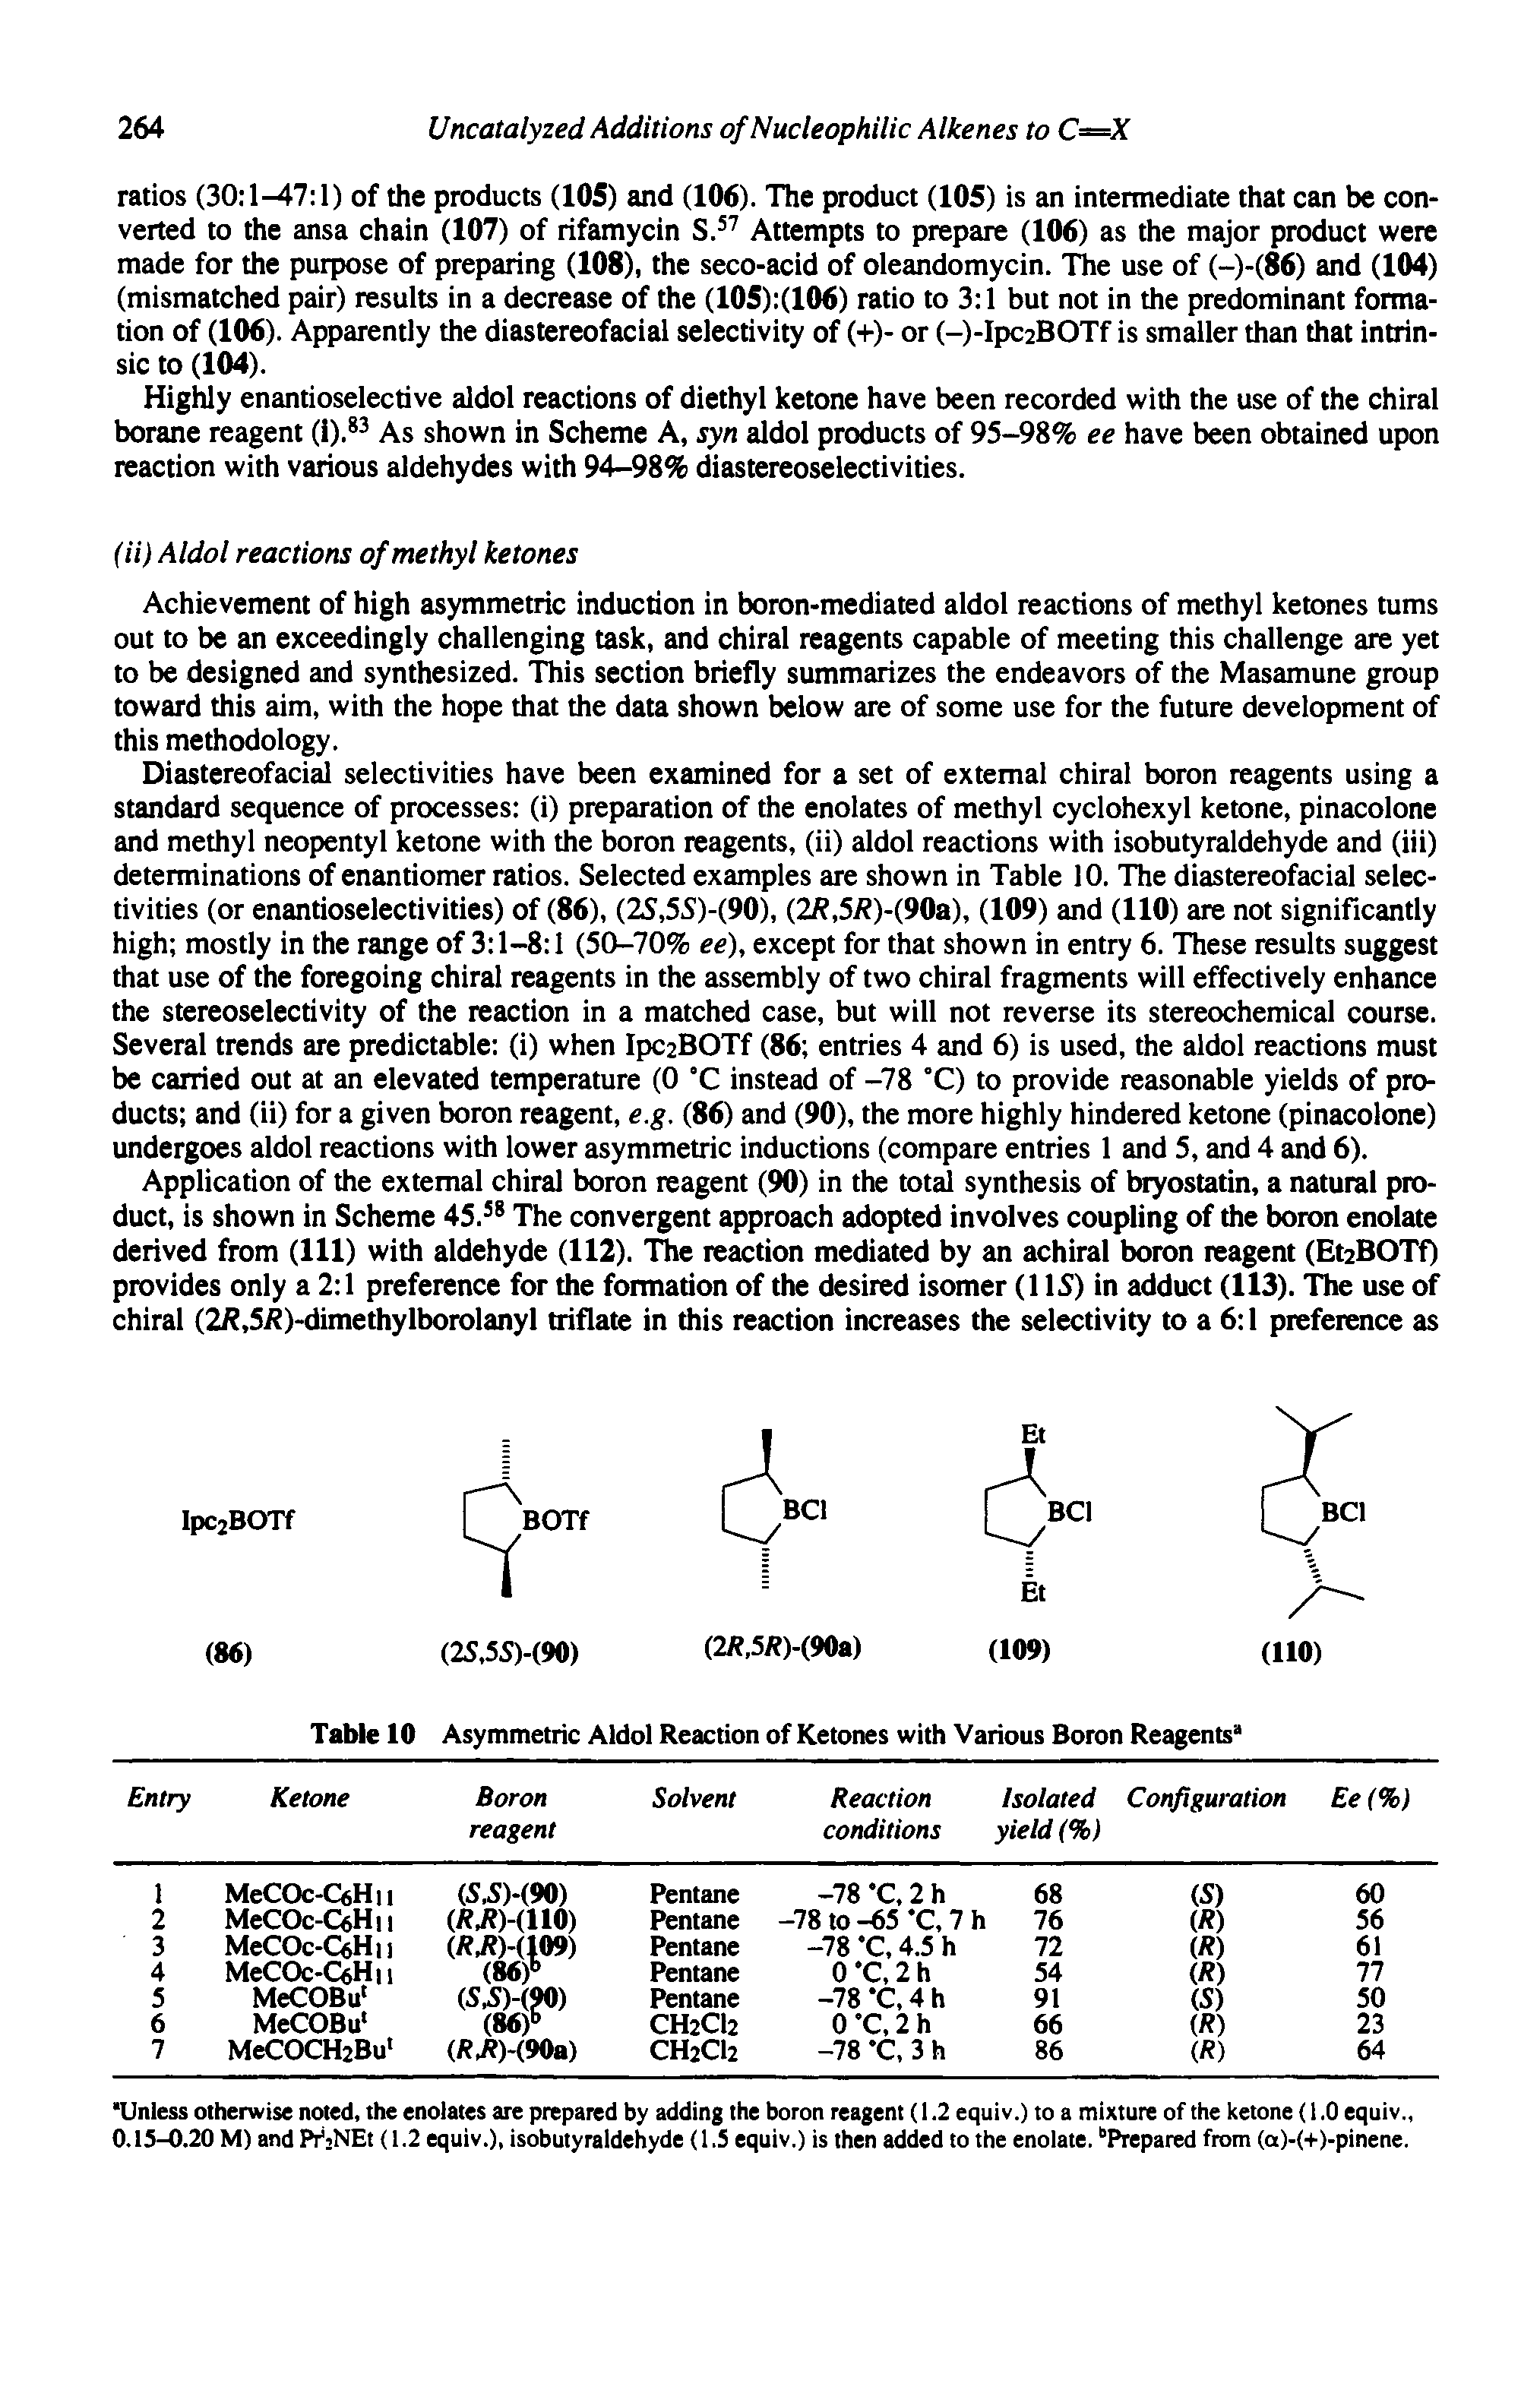 Table 10 Asymmetric Aldol Reaction of Ketones with Various Boron Reagents"...